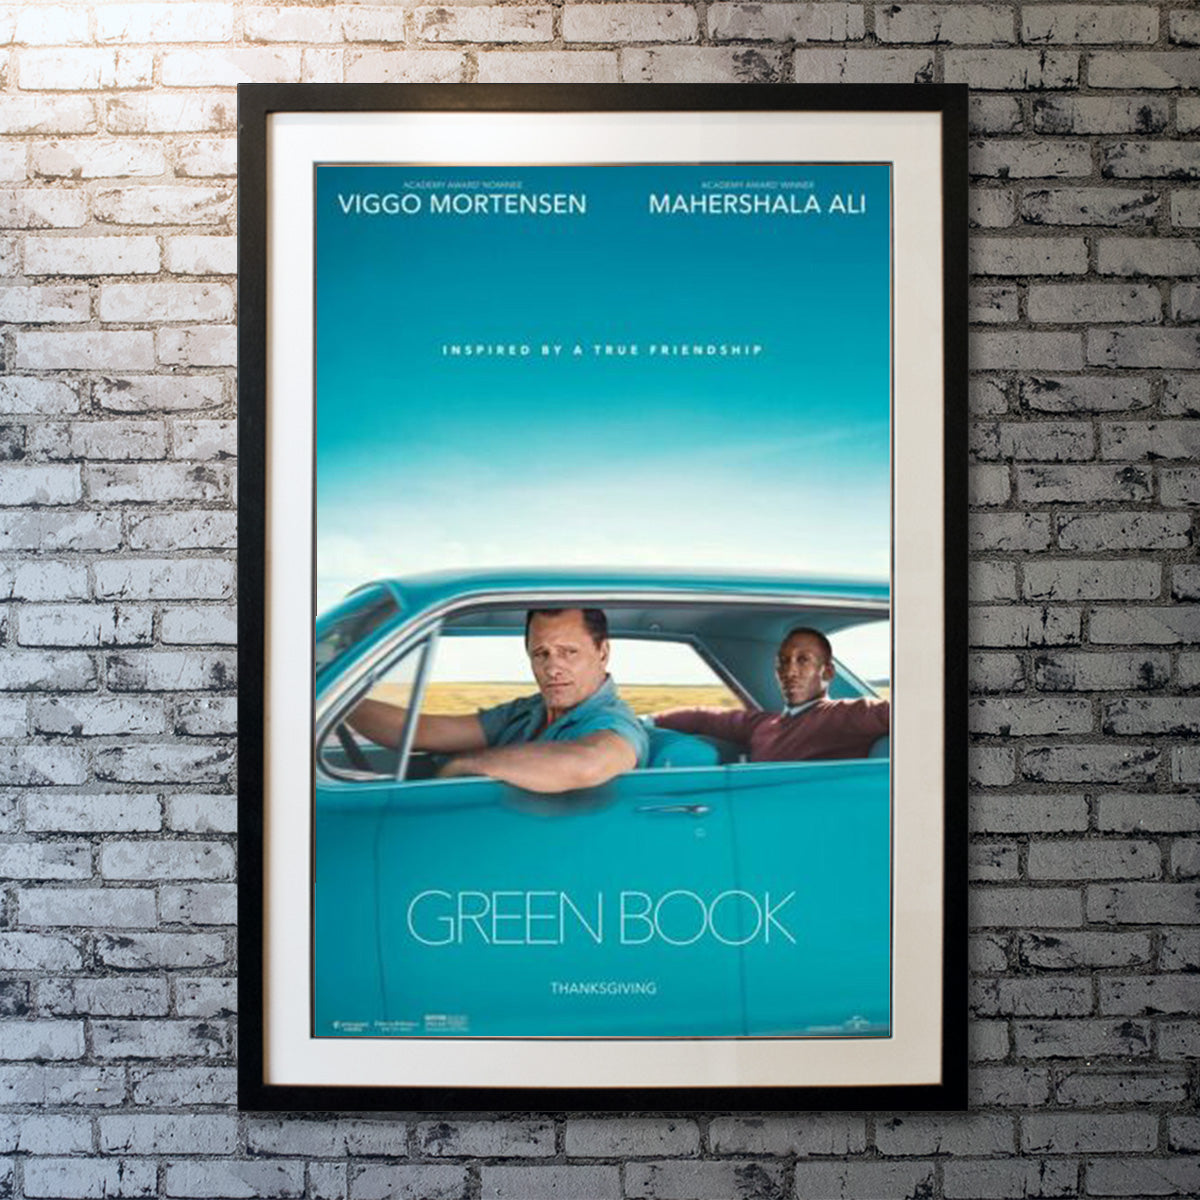 Original Movie Poster of Green Book (2018)